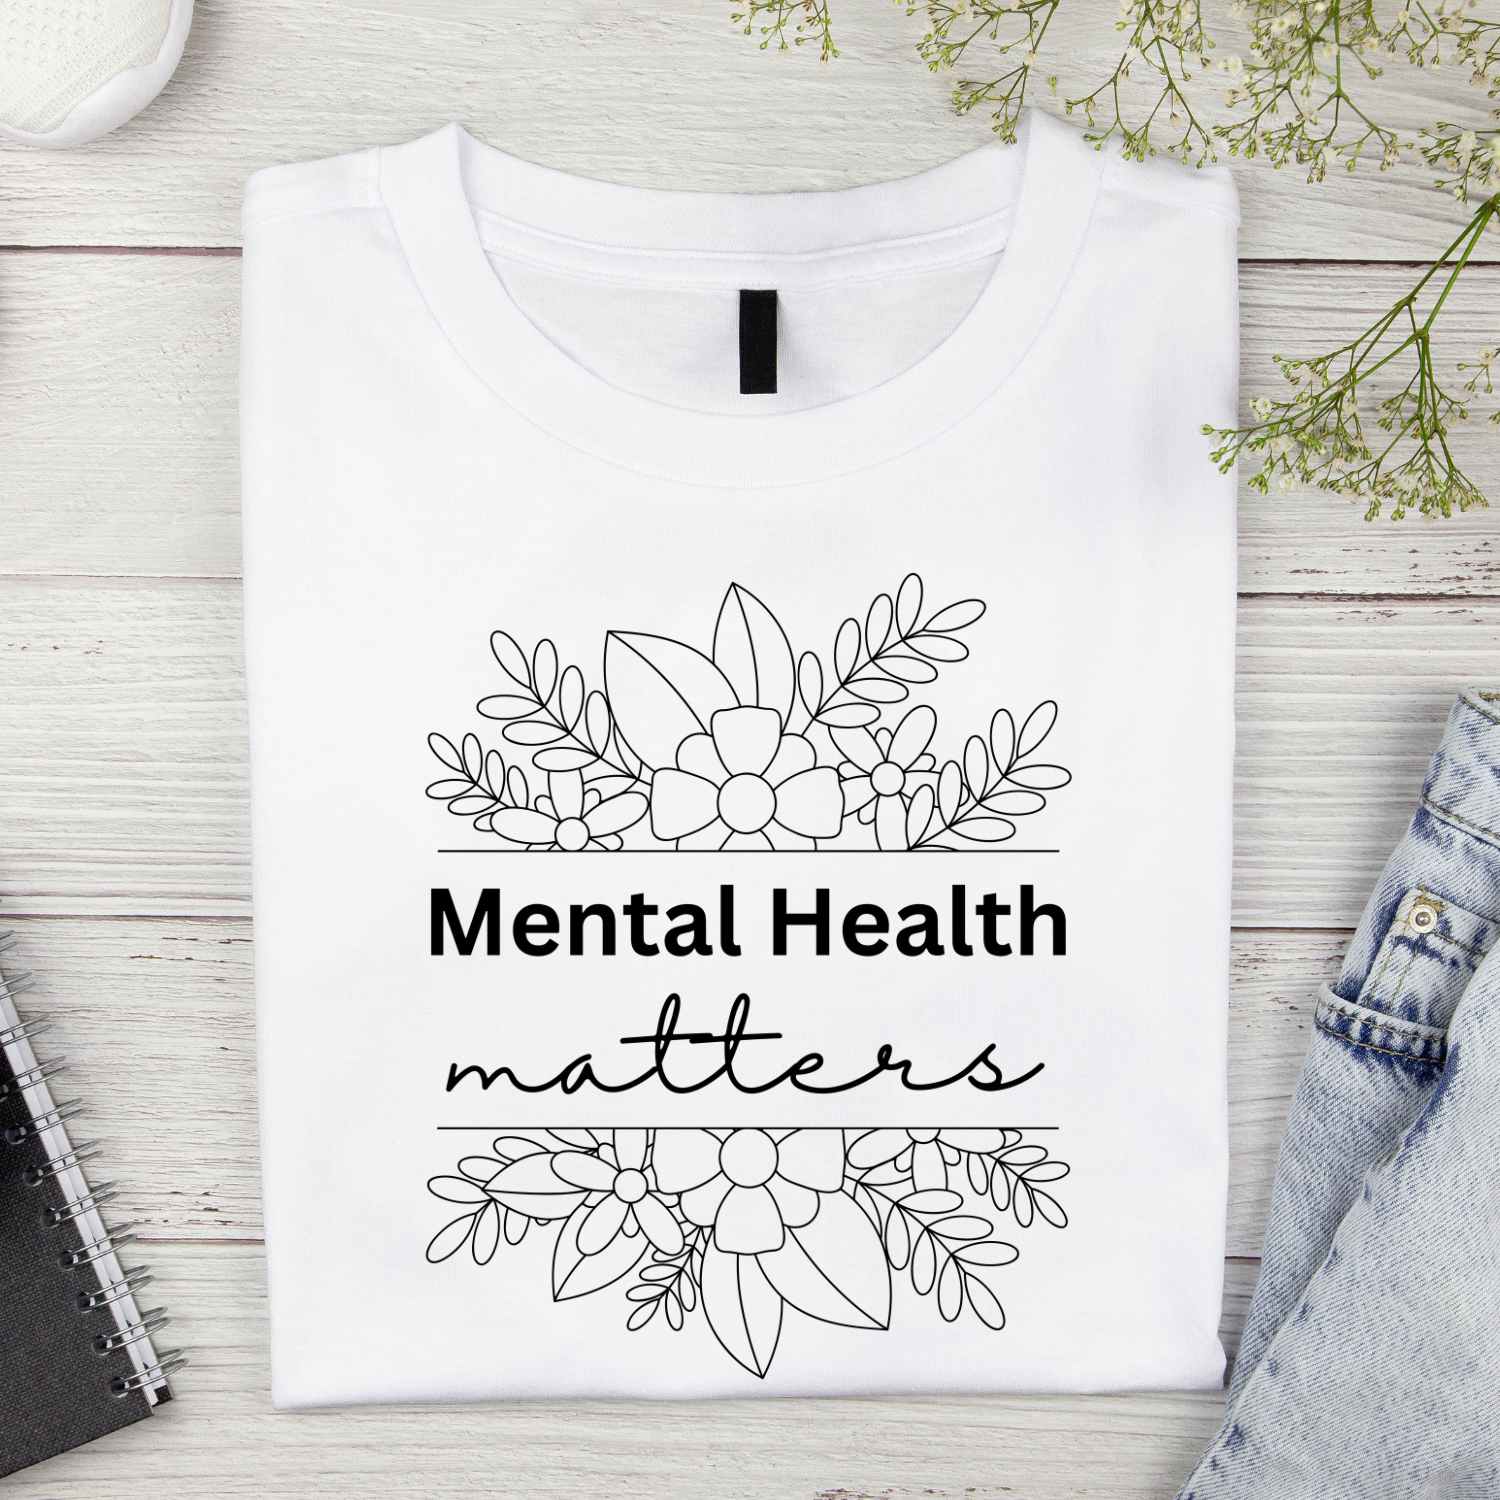 Mental Health Matters T-shirt Design